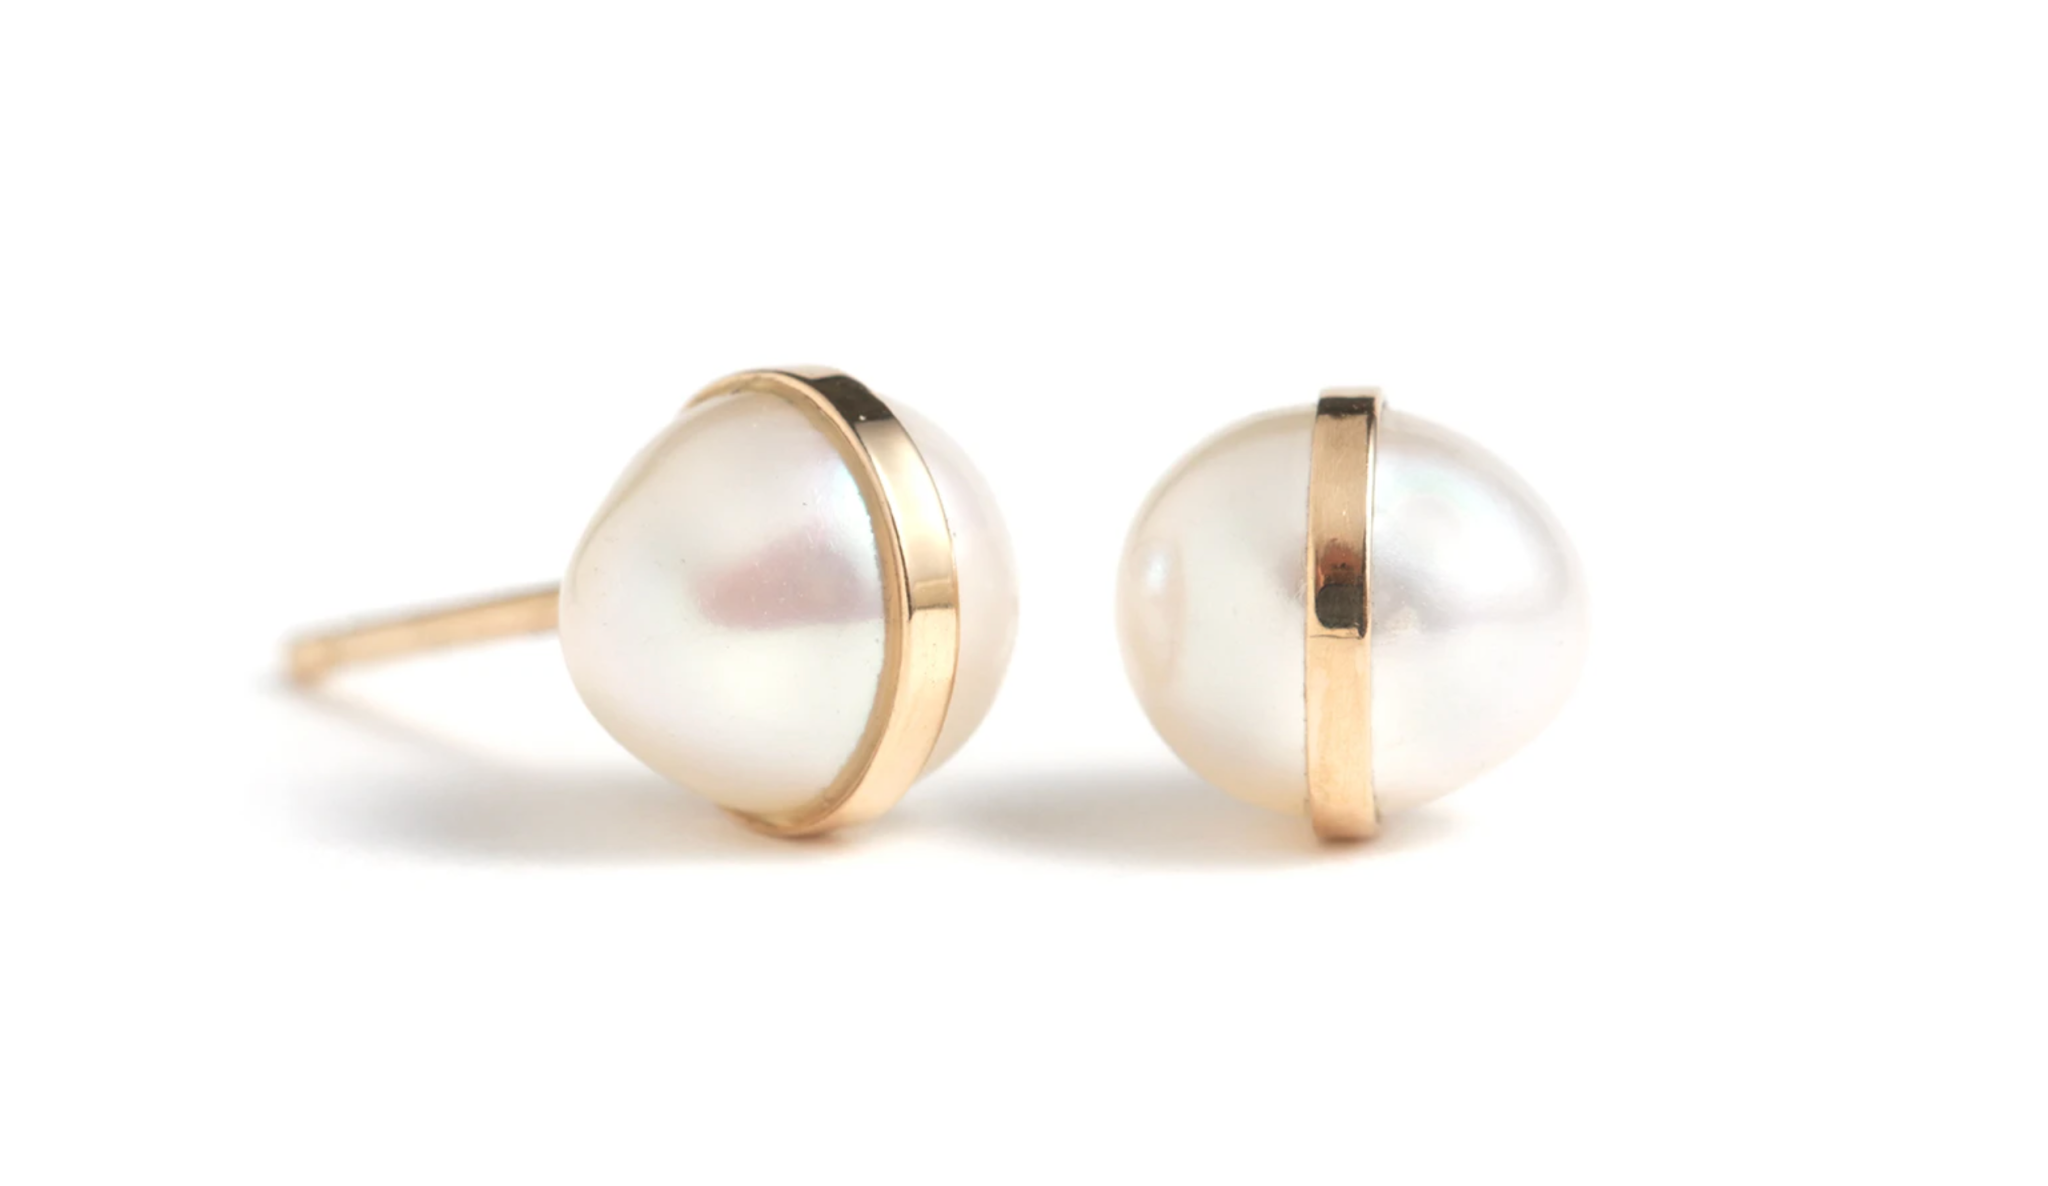 Cultured Pearls vs. Real Pearls - Pearls of Joy